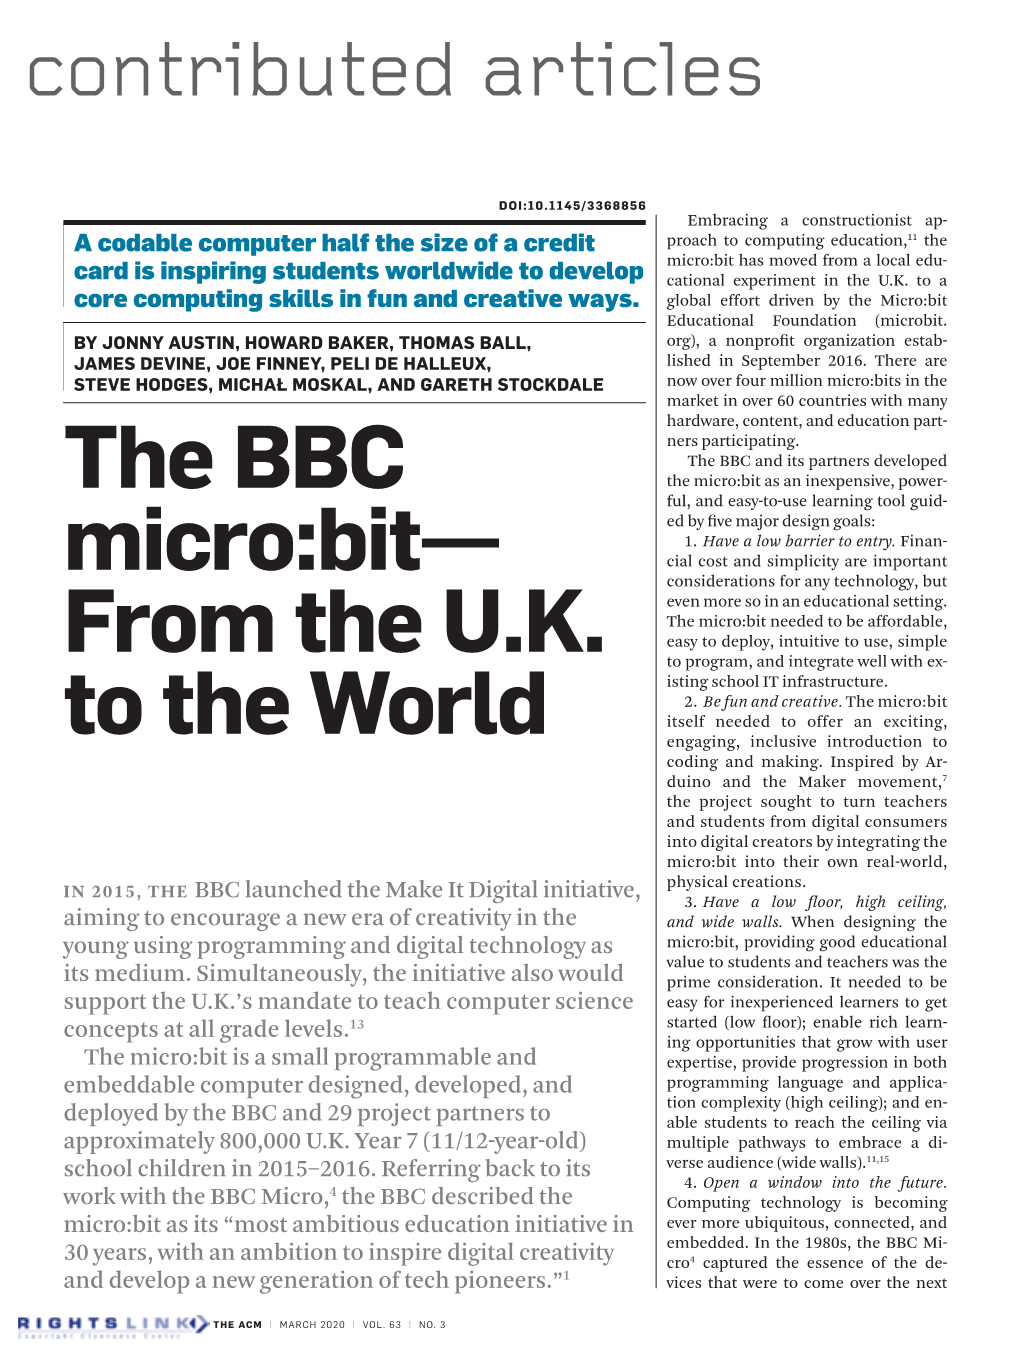 The BBC Micro:Bit